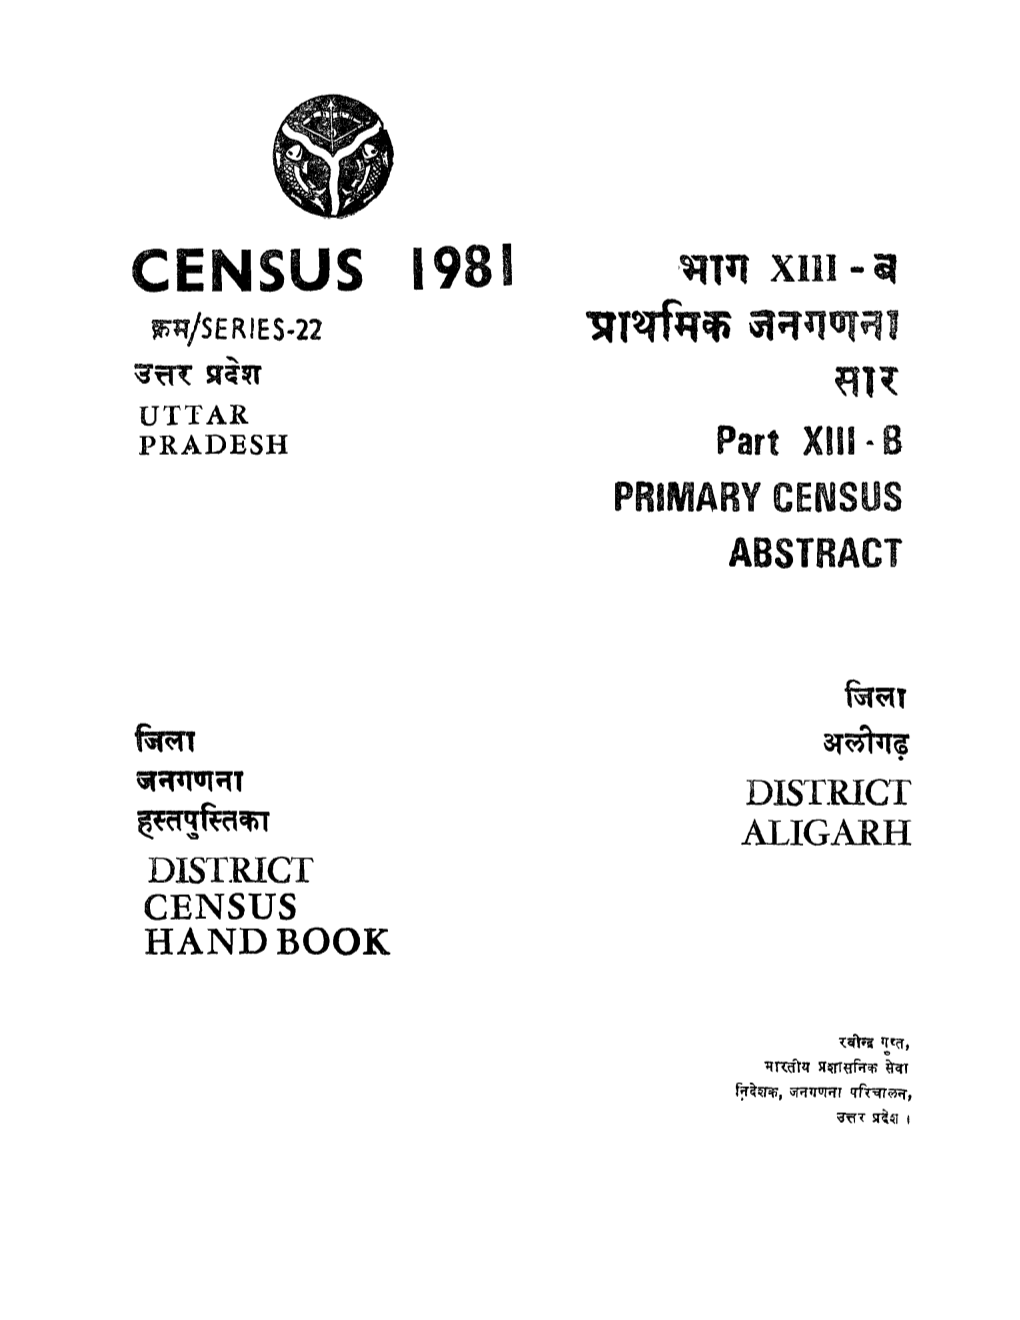 District Census Handbook, Allgarh, Part XIII-B, Series-22, Uttar